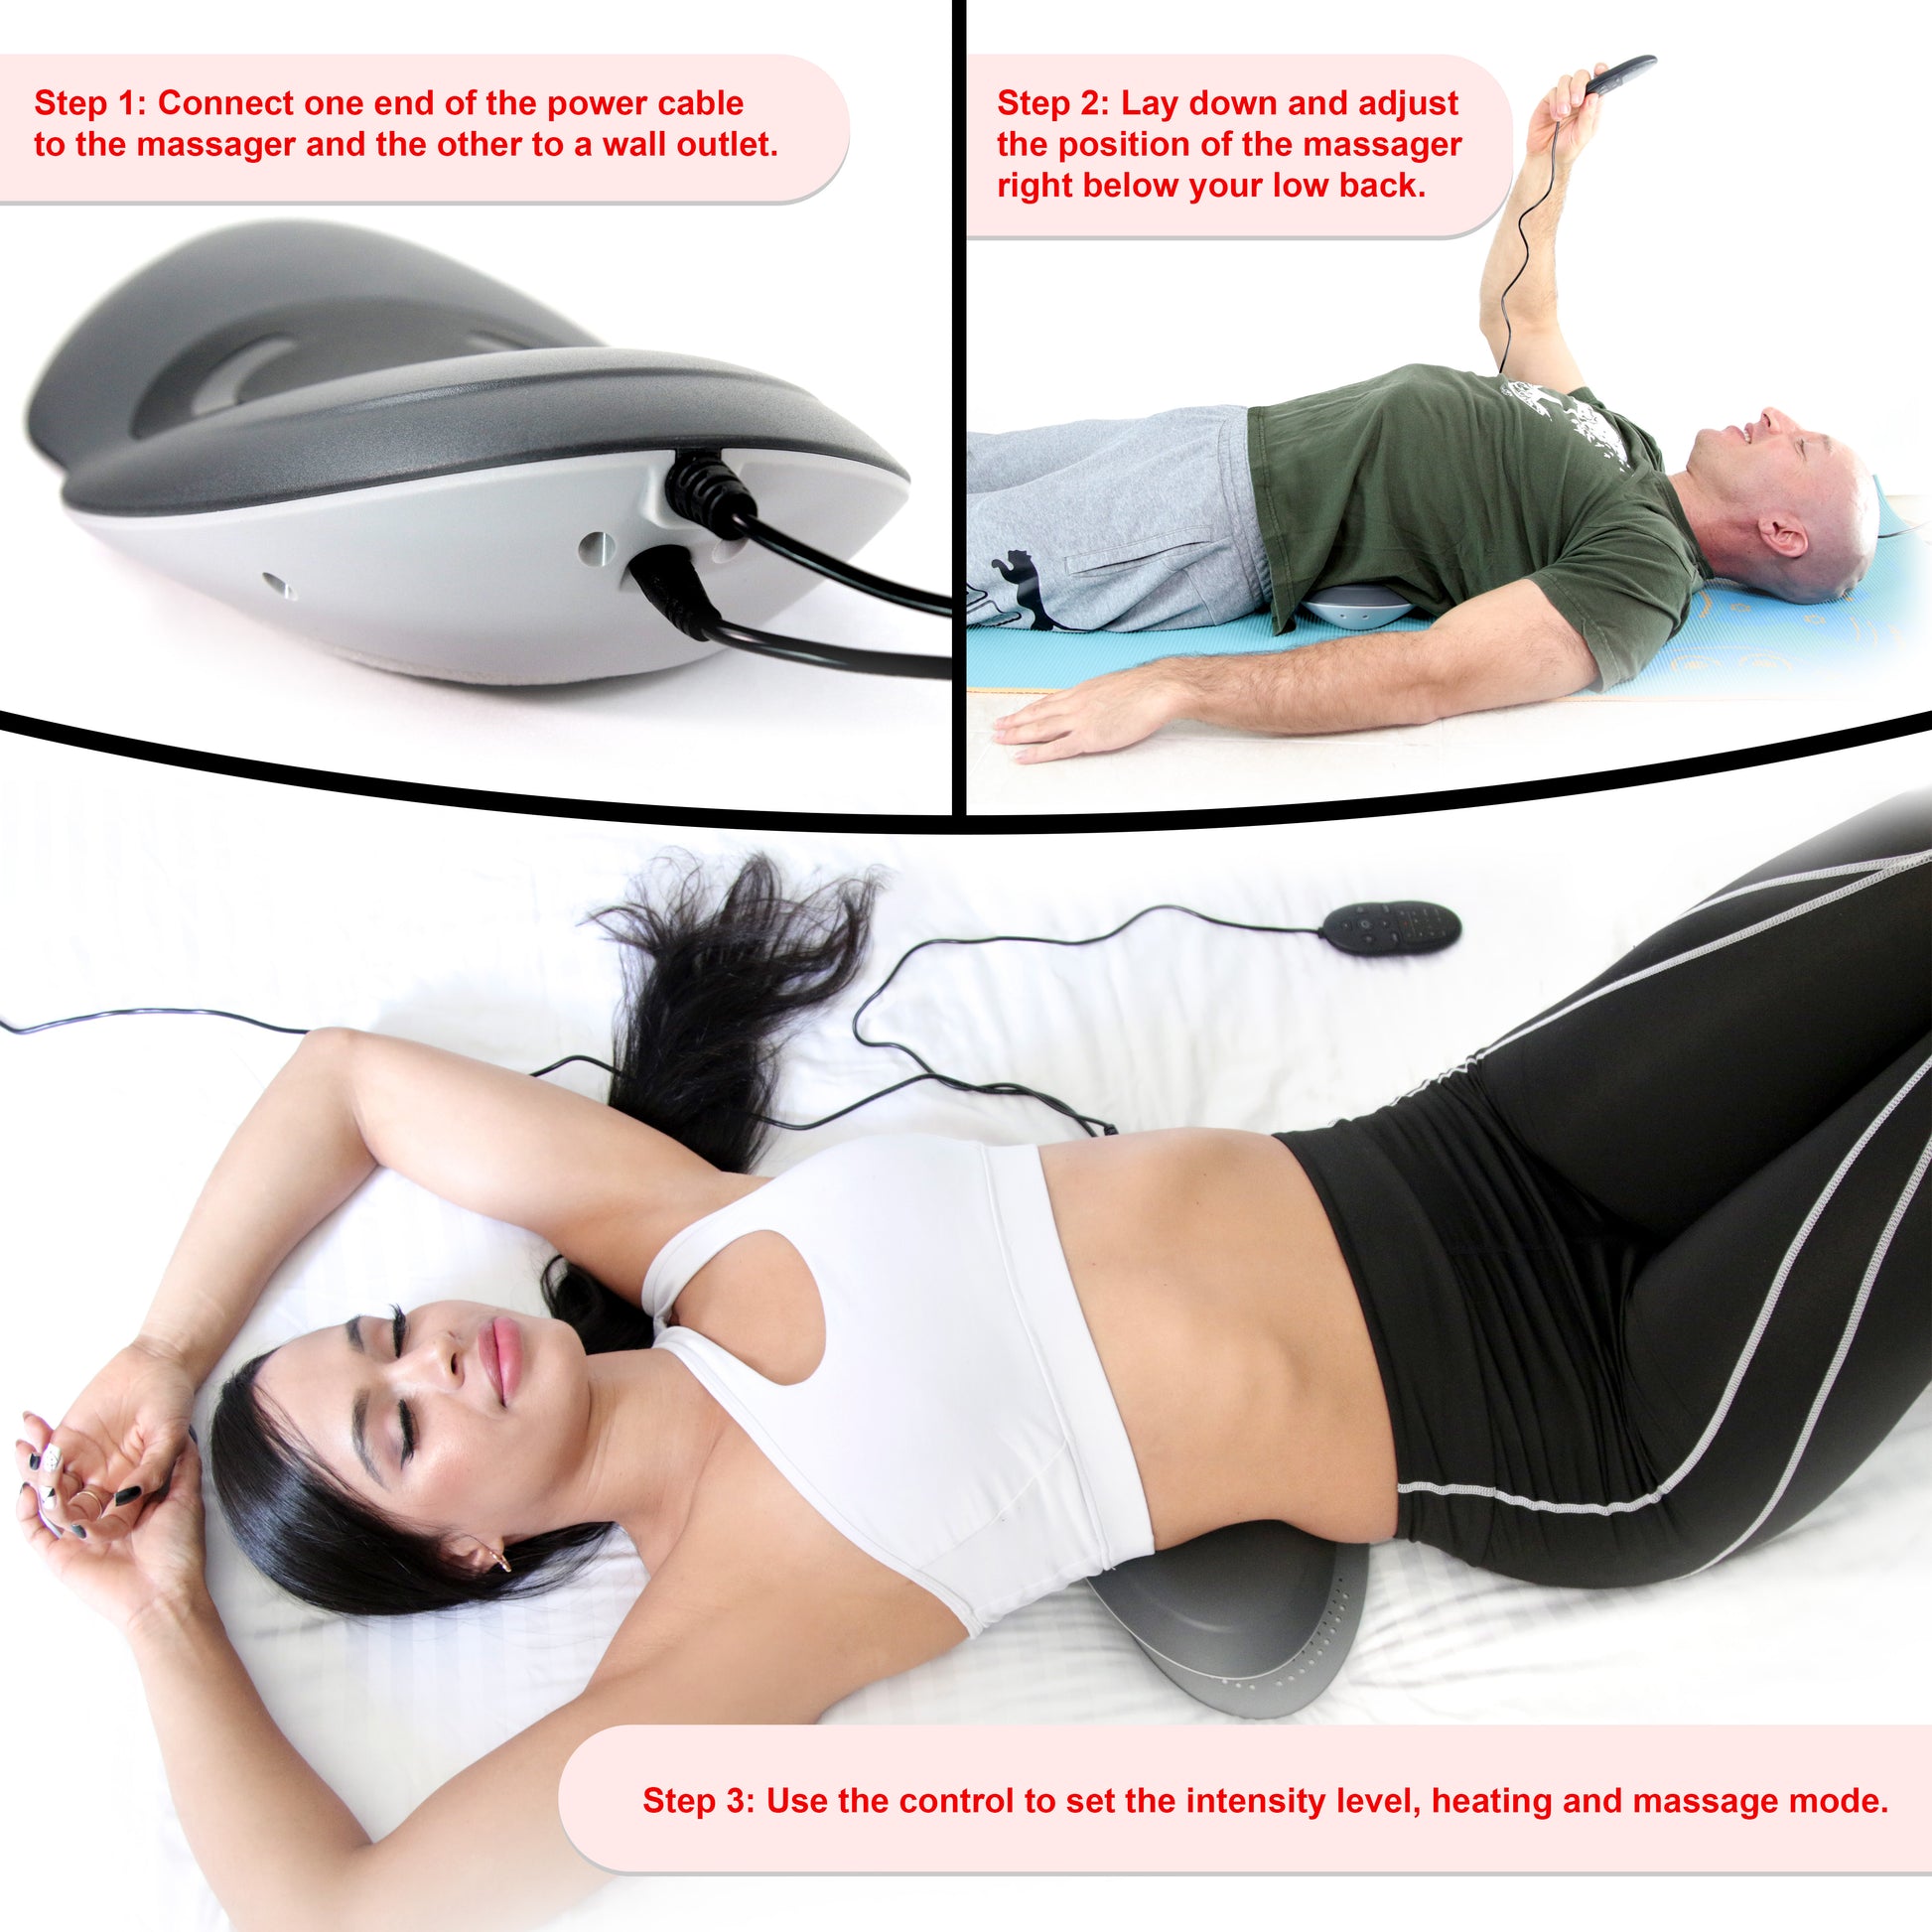 Electric Waist Traction Machine Back Massager Vibration Massage